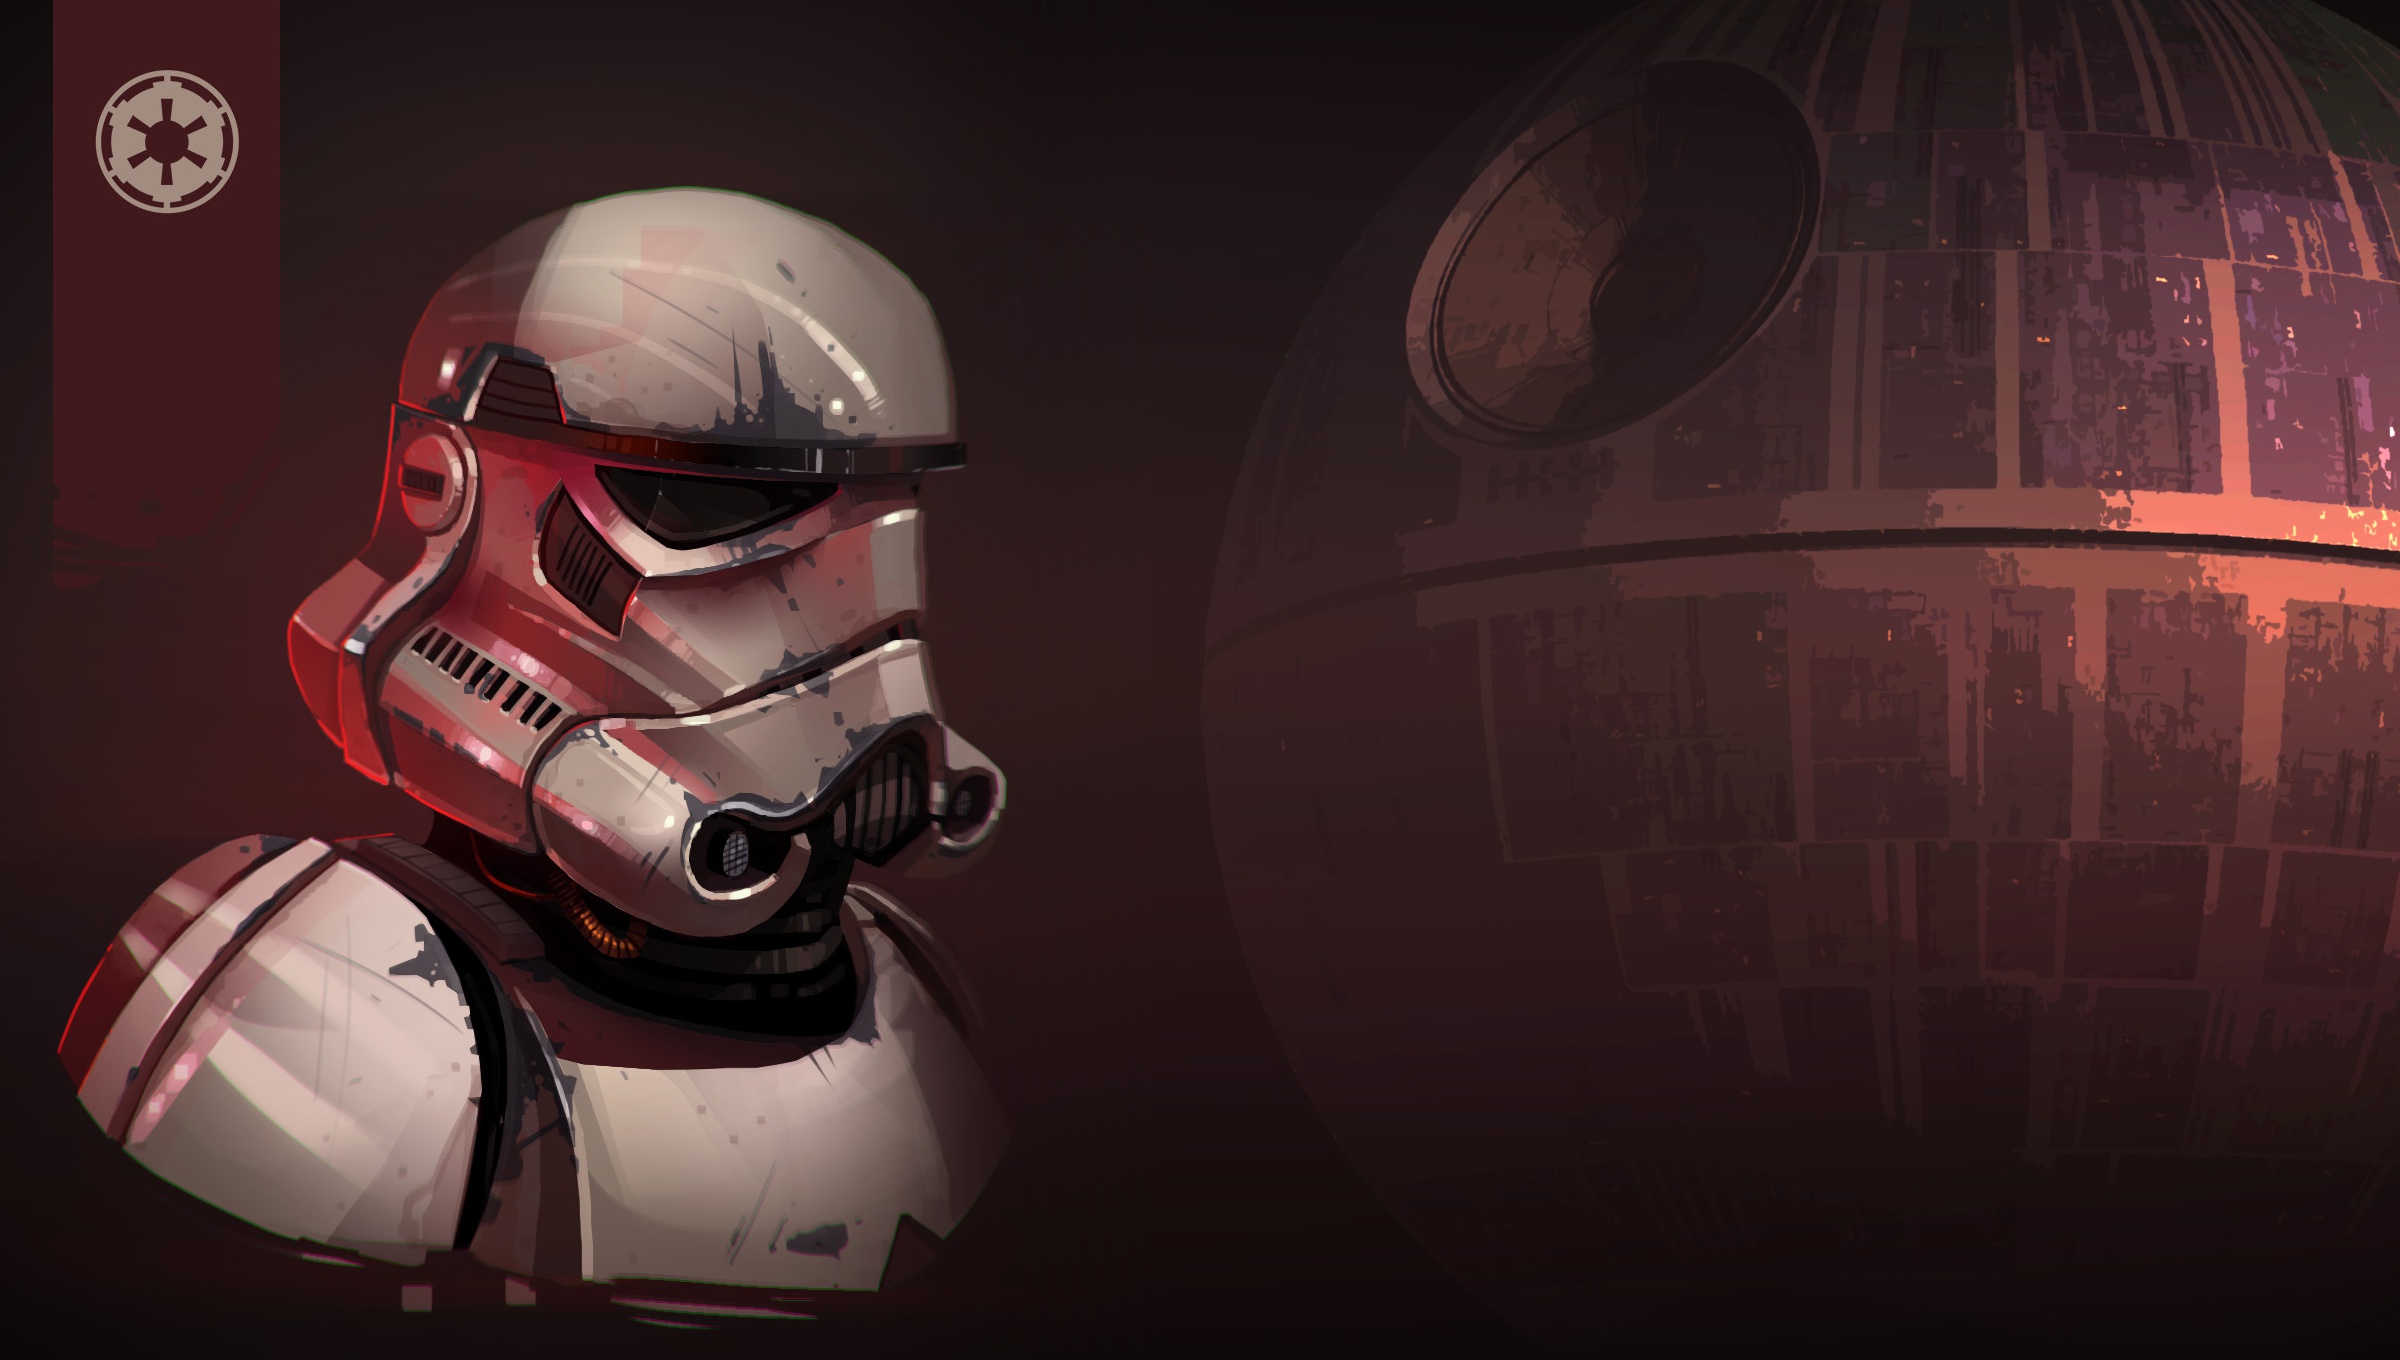 General 2400x1360 Star Wars stormtrooper science fiction helmet Death Star Imperial Forces digital art